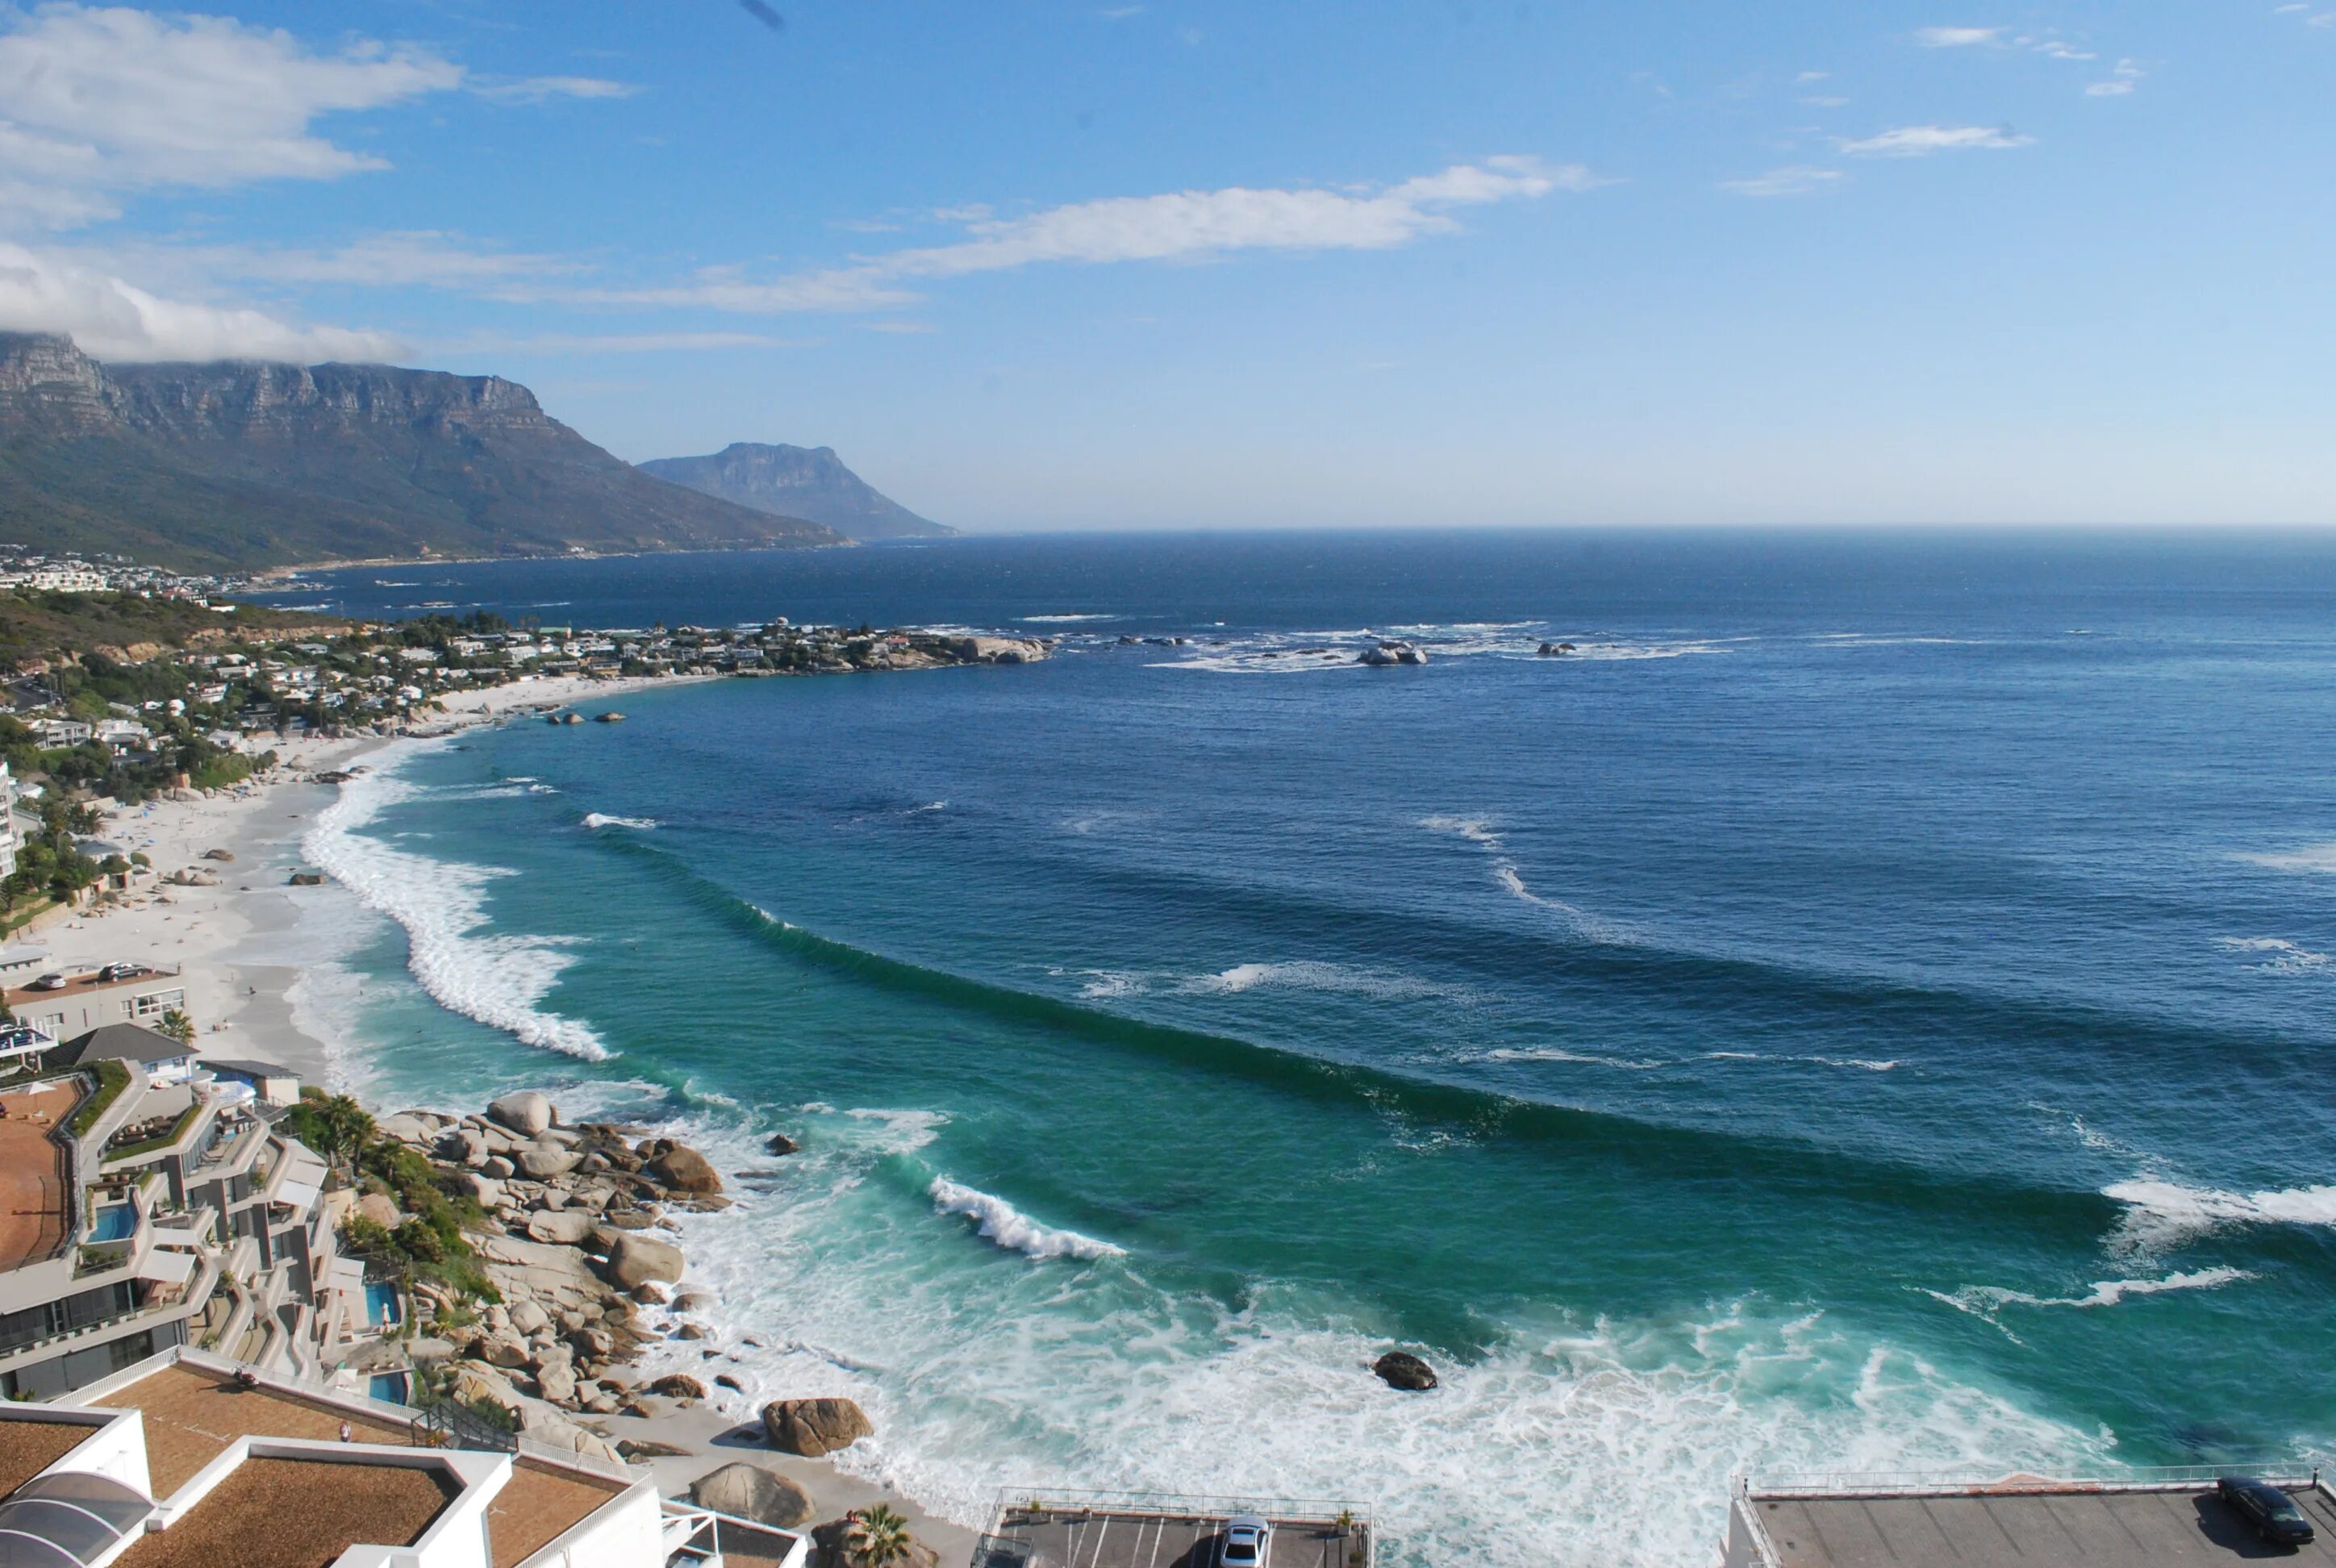 Клифтон Бич Кейптаун. Пляж Клифтон Кейптаун. Южная Африка Кейптаун Клифтон- Бич. ЮАР Кейптаун пляж.